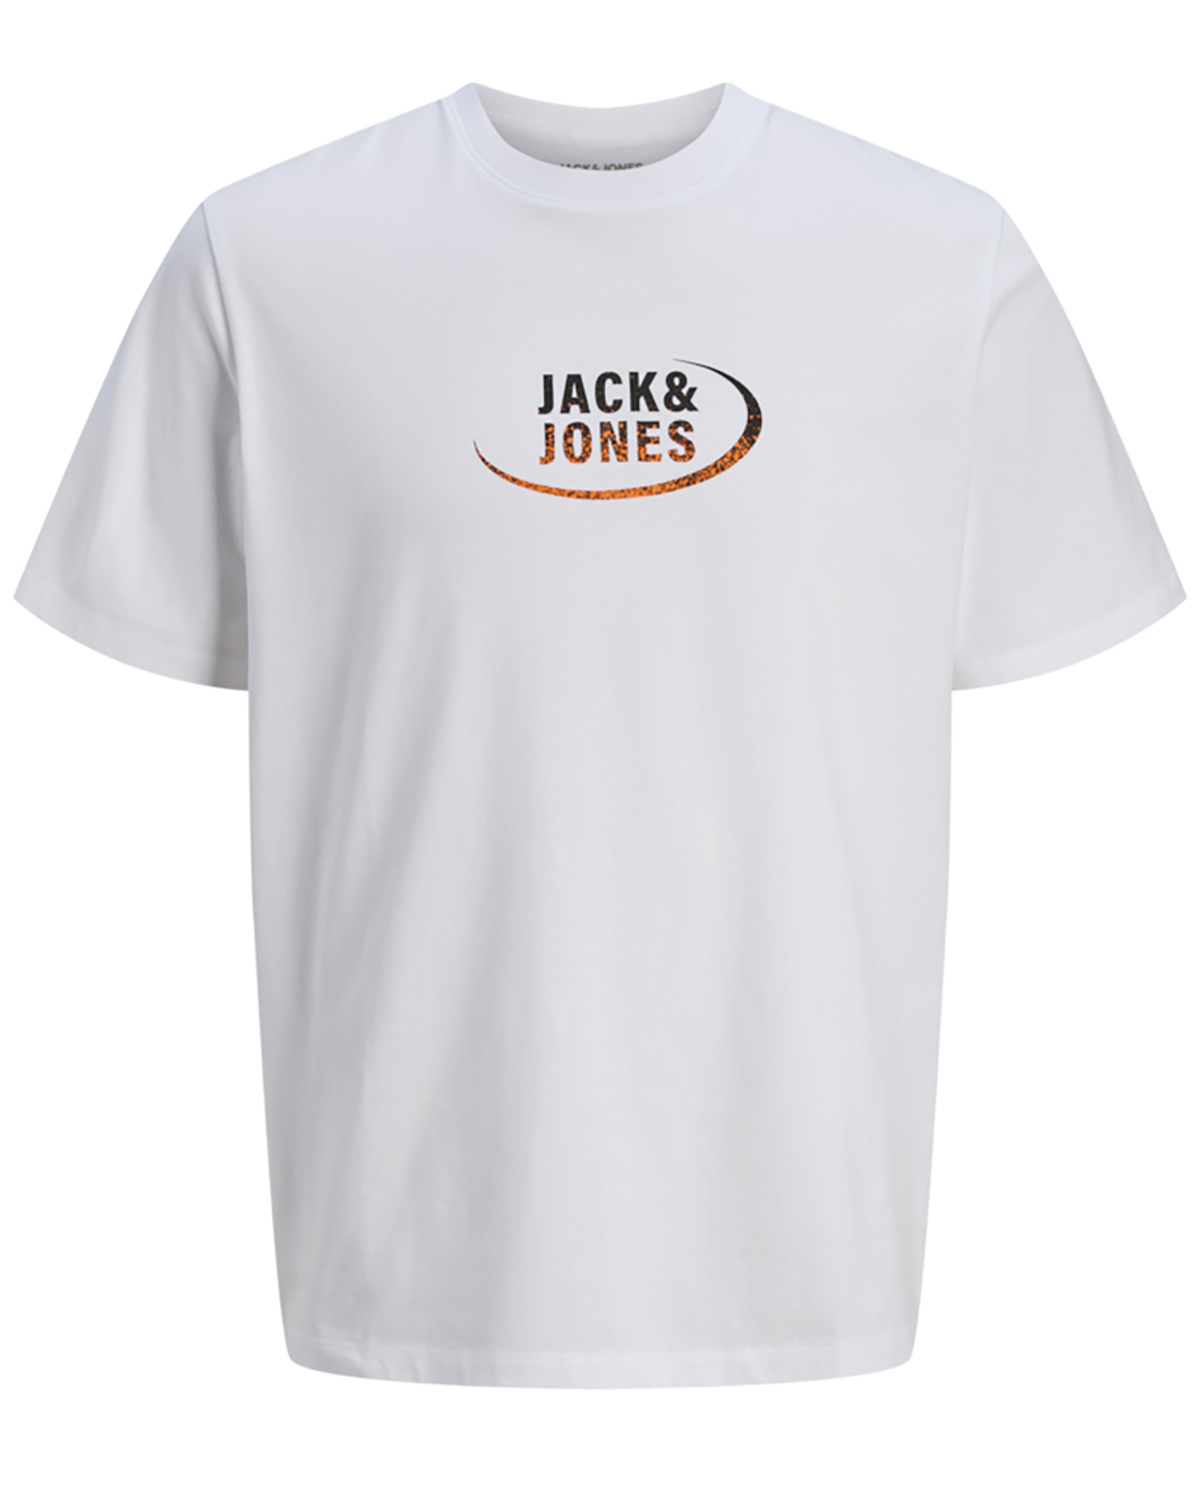 Se Jack & Jones t-shirt s/s, Gradient tee, hvid - 188,L+,L hos Umame.dk